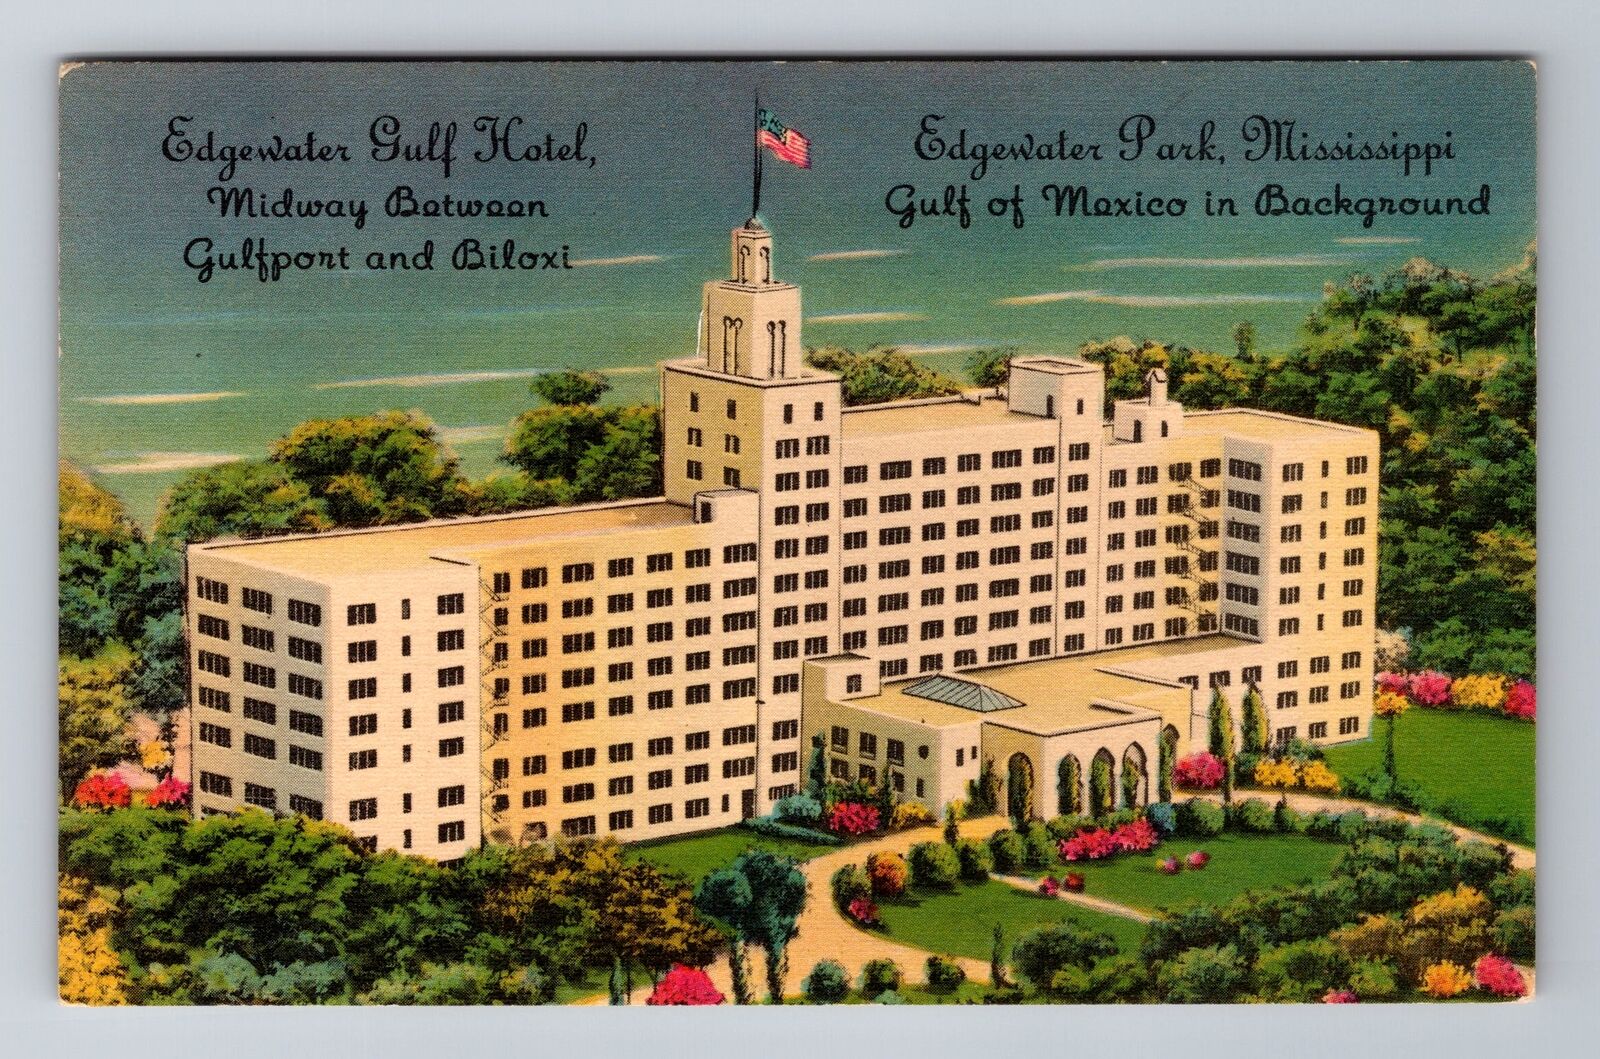 Edgewater Park MS-Mississippi, Edgewater Gulf Hotel, Advertise Vintage Postcard